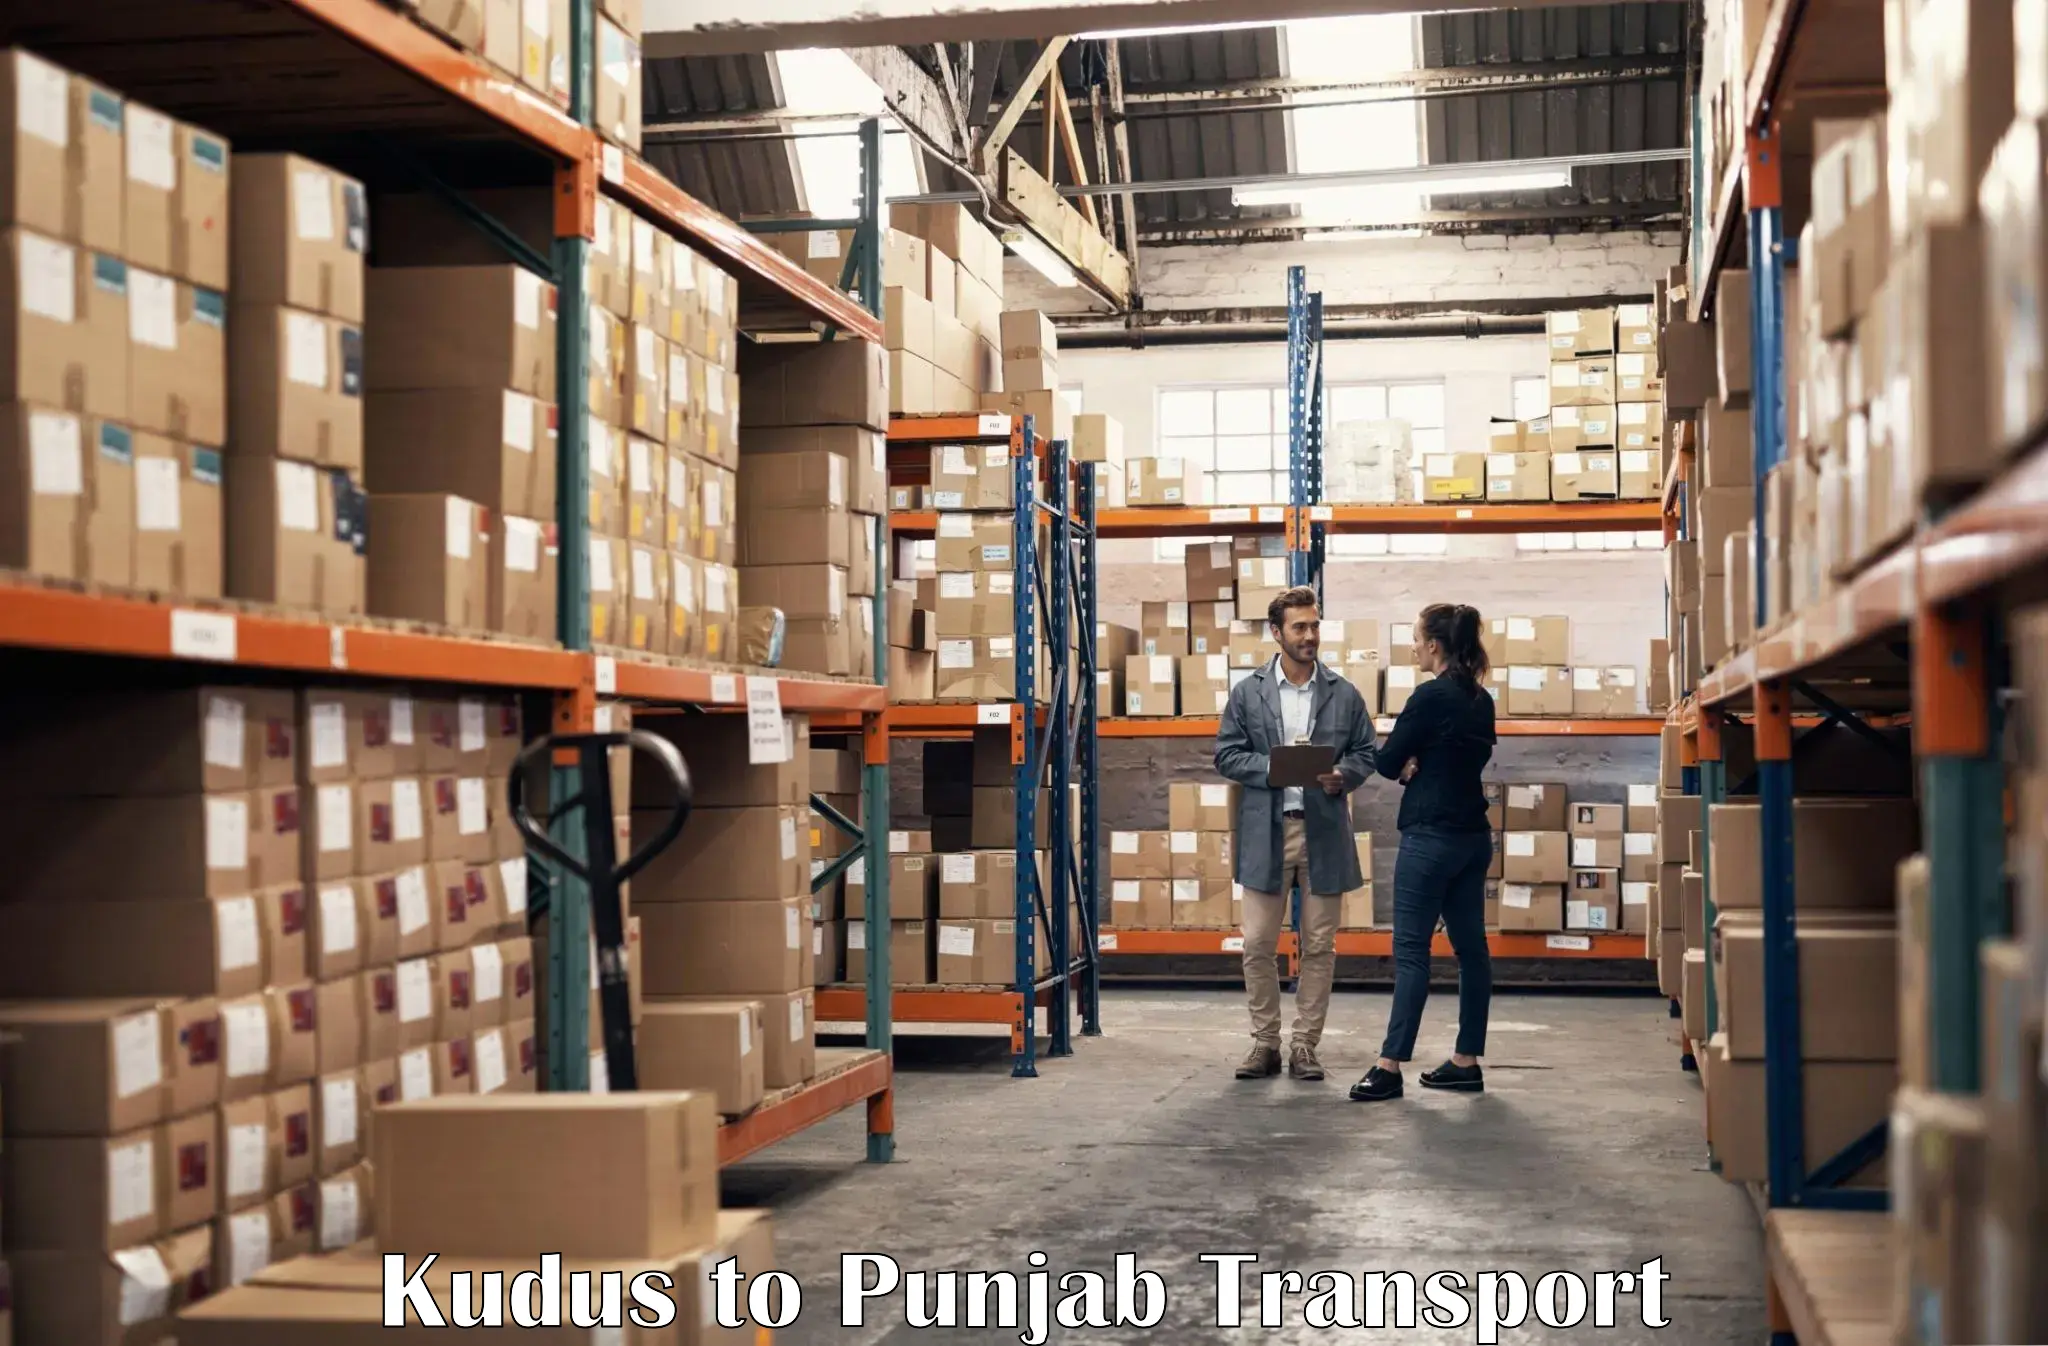 Part load transport service in India Kudus to Punjab